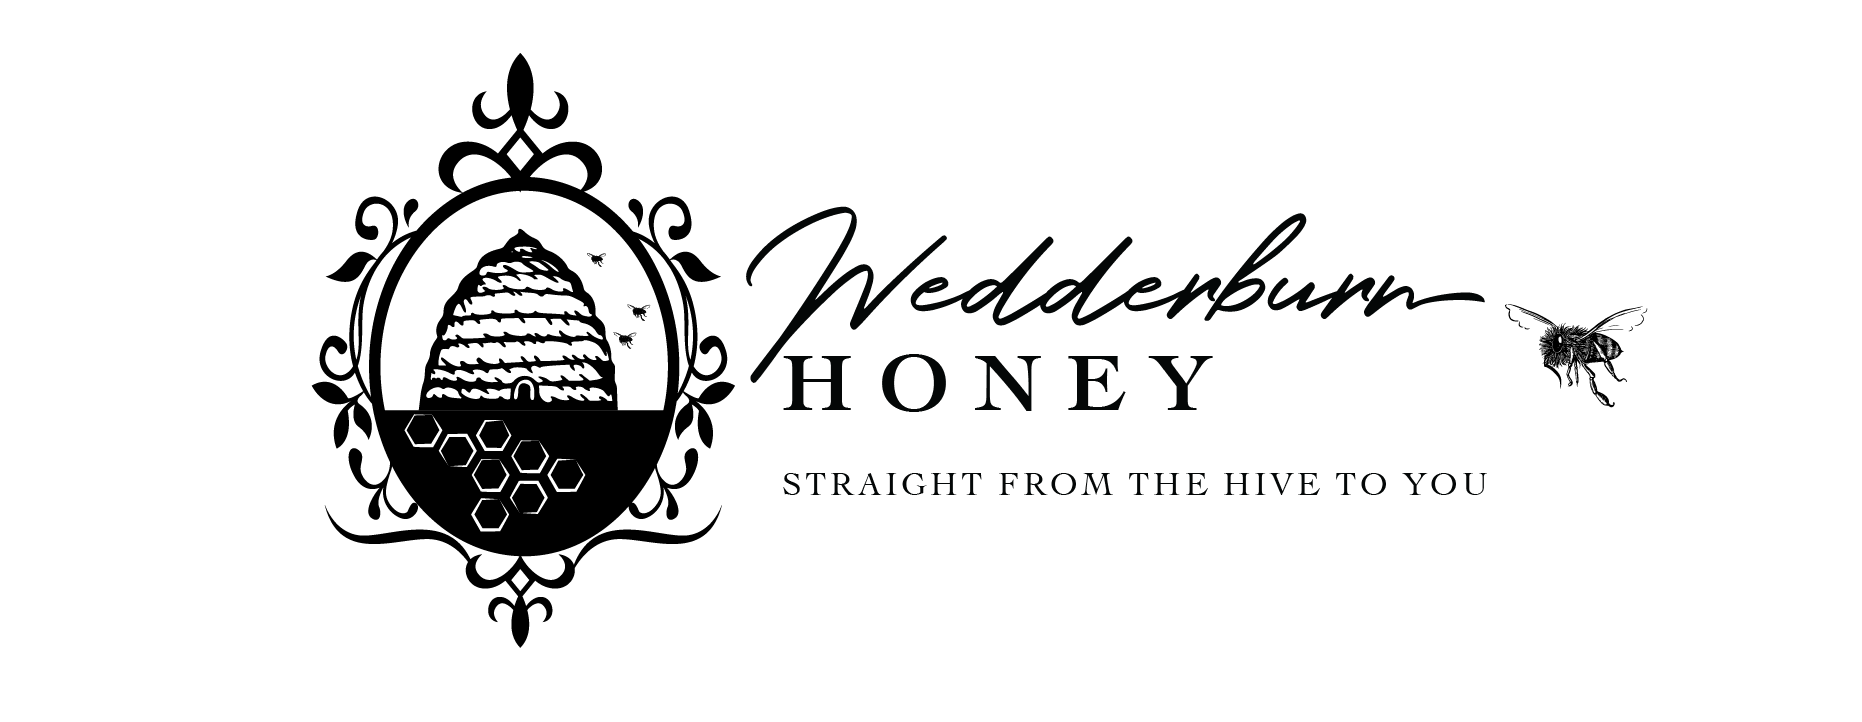 Wedderburn Honey